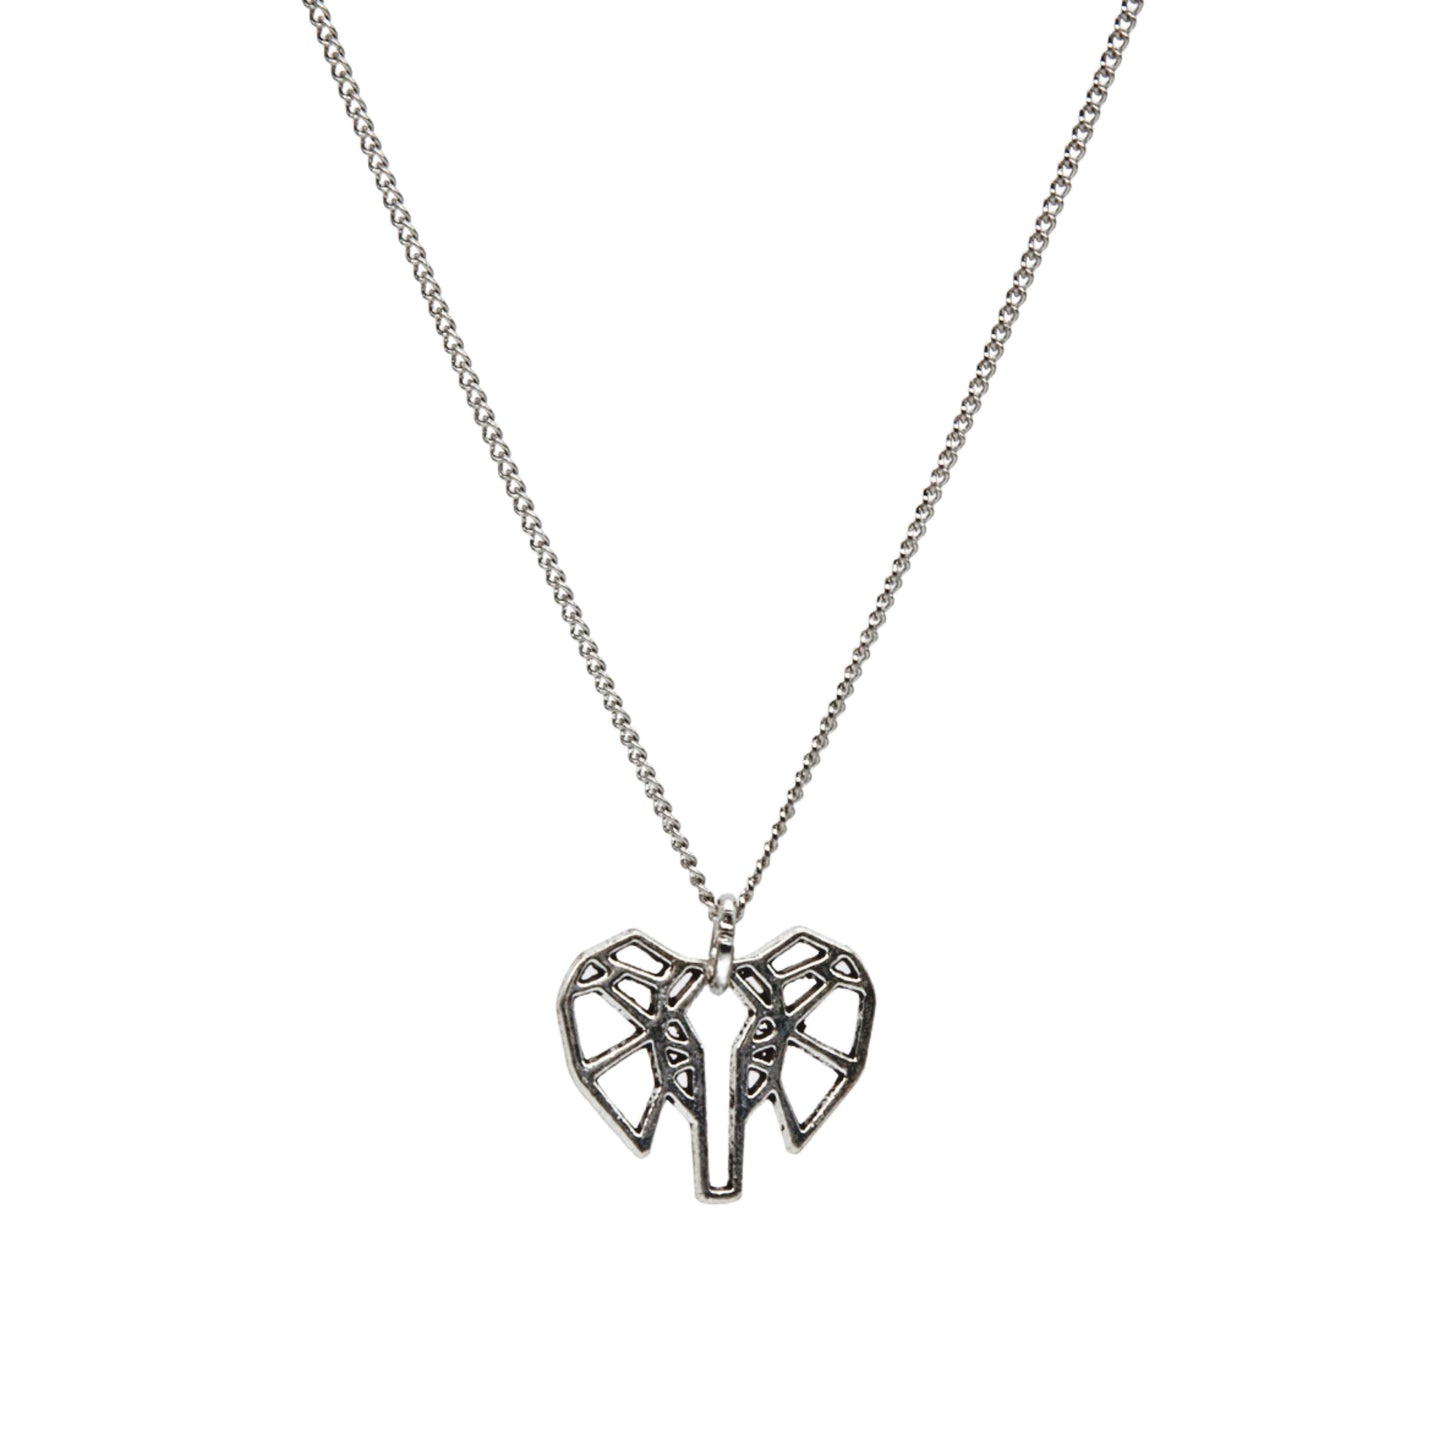 Silver Origami Elephant Head Necklace - Adjustable Length